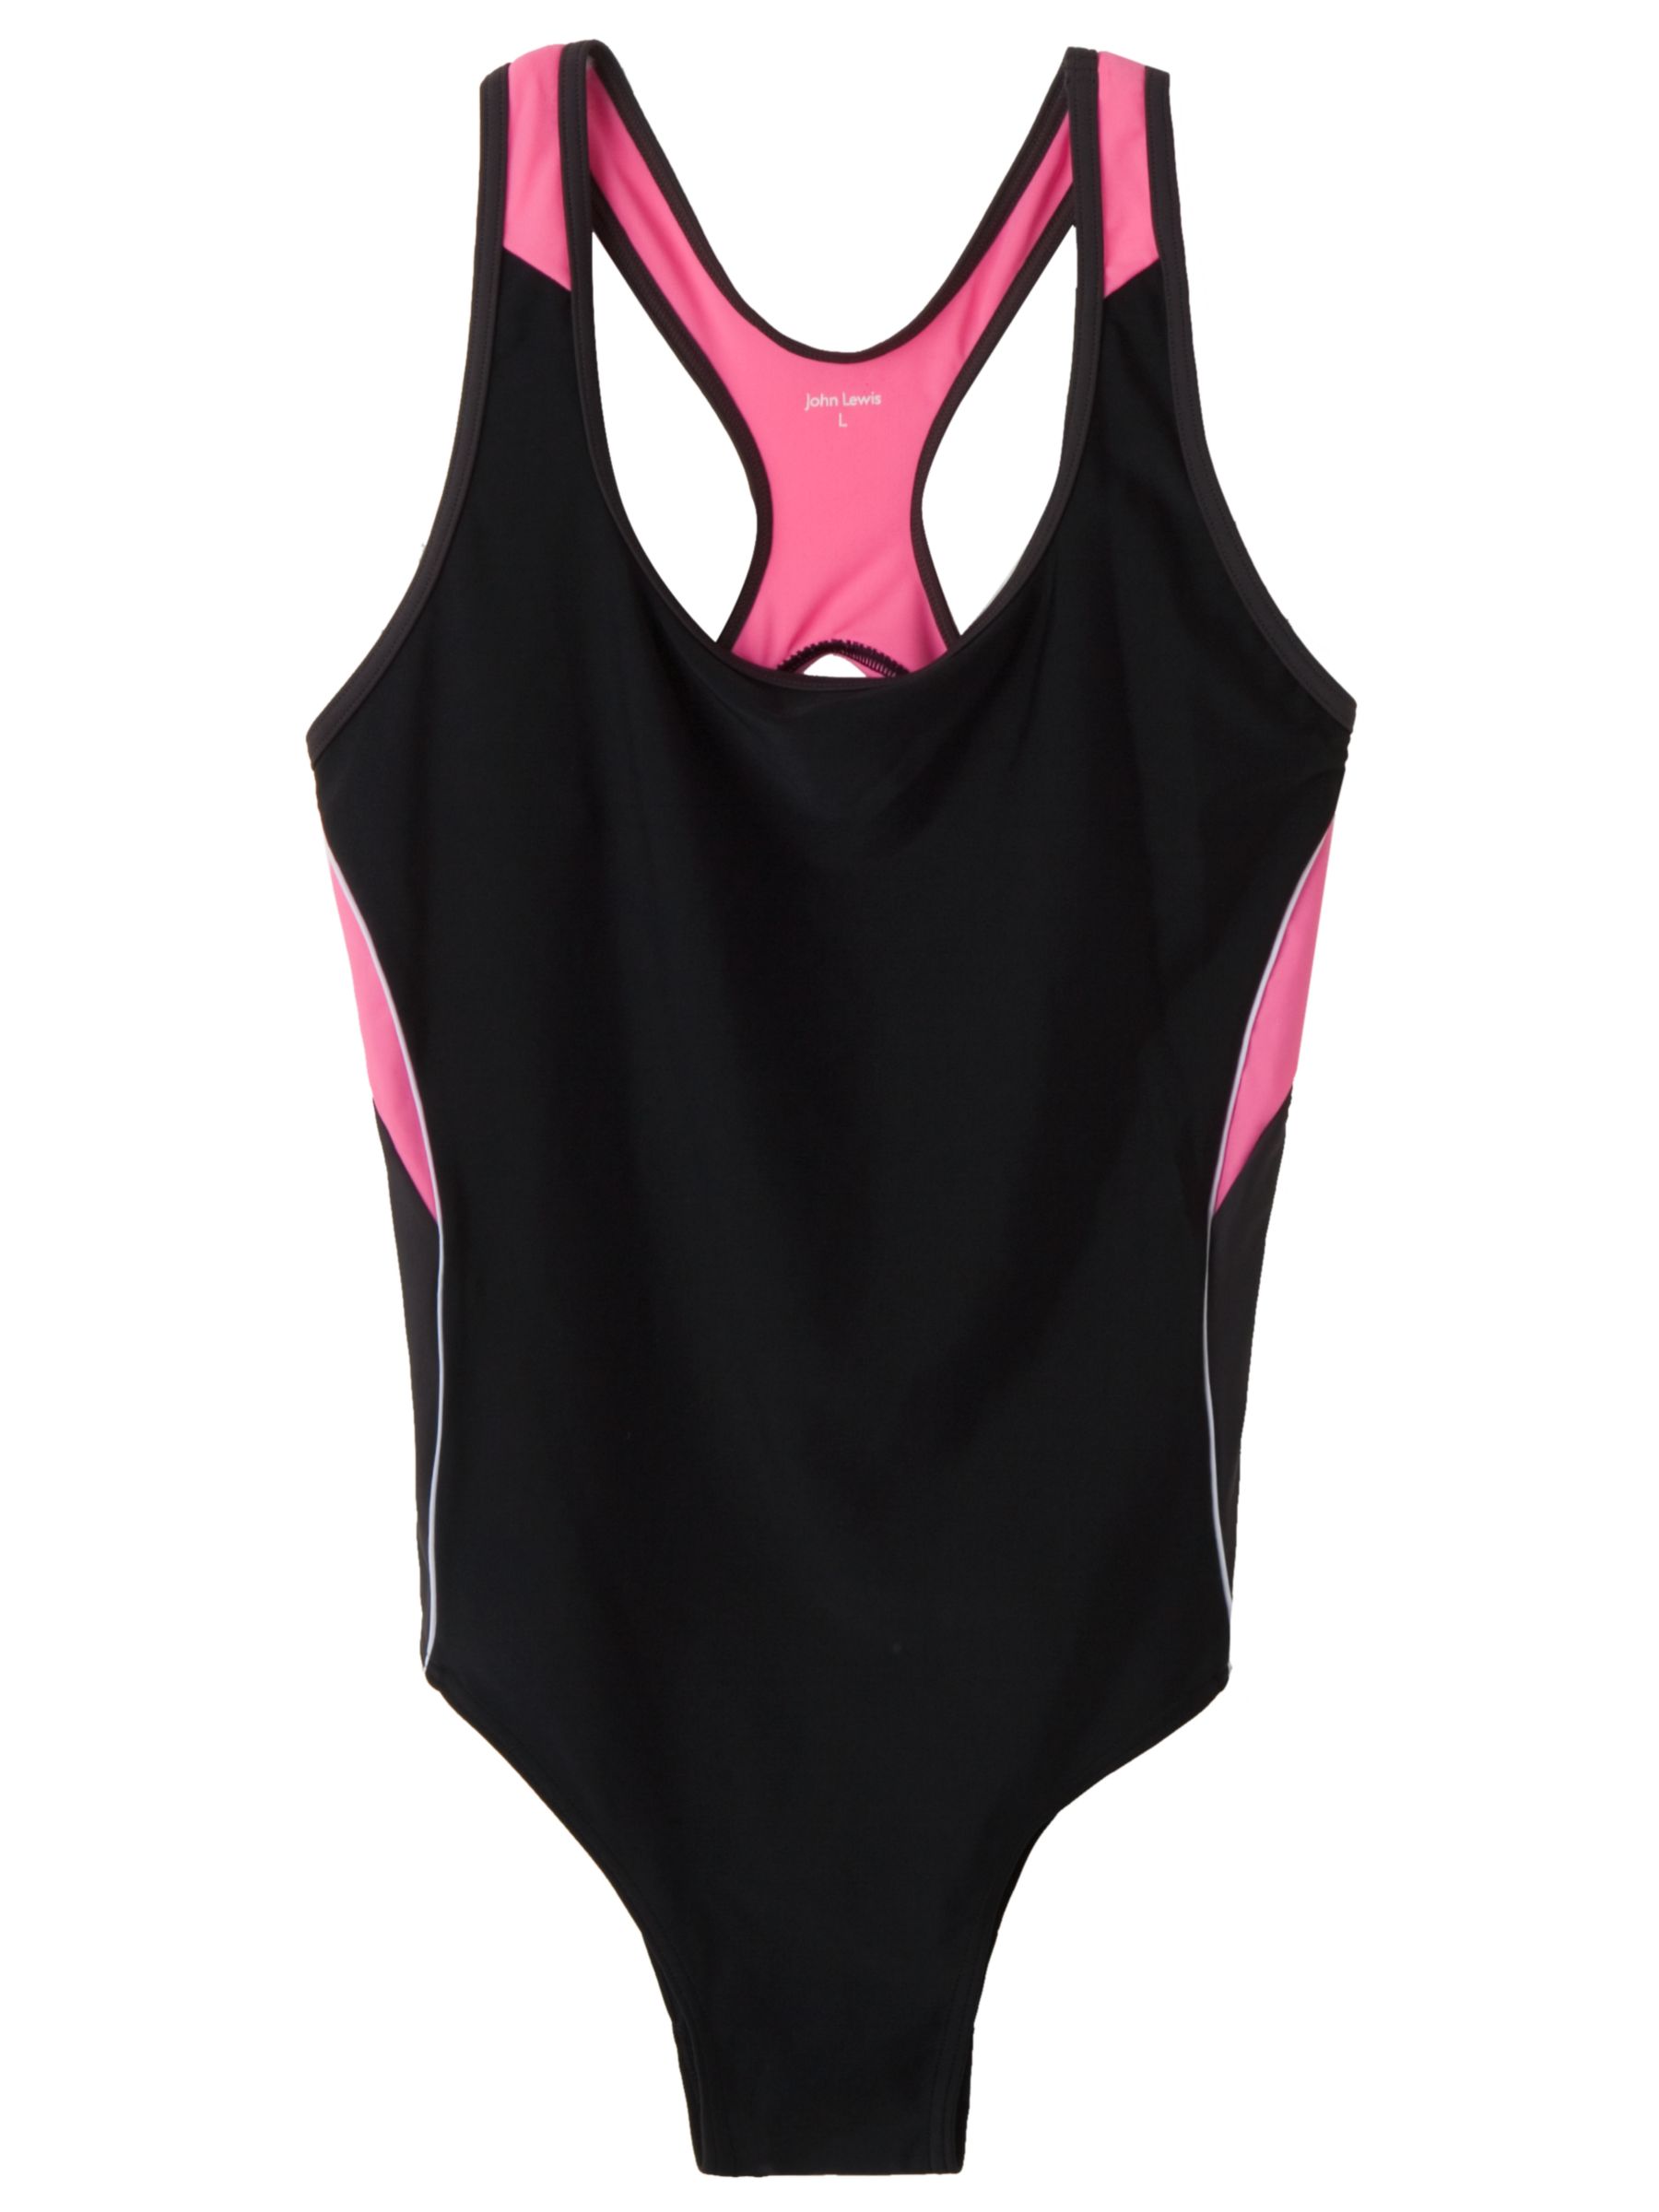 John Lewis Racer Back Swimsuit, Black/Pink, L